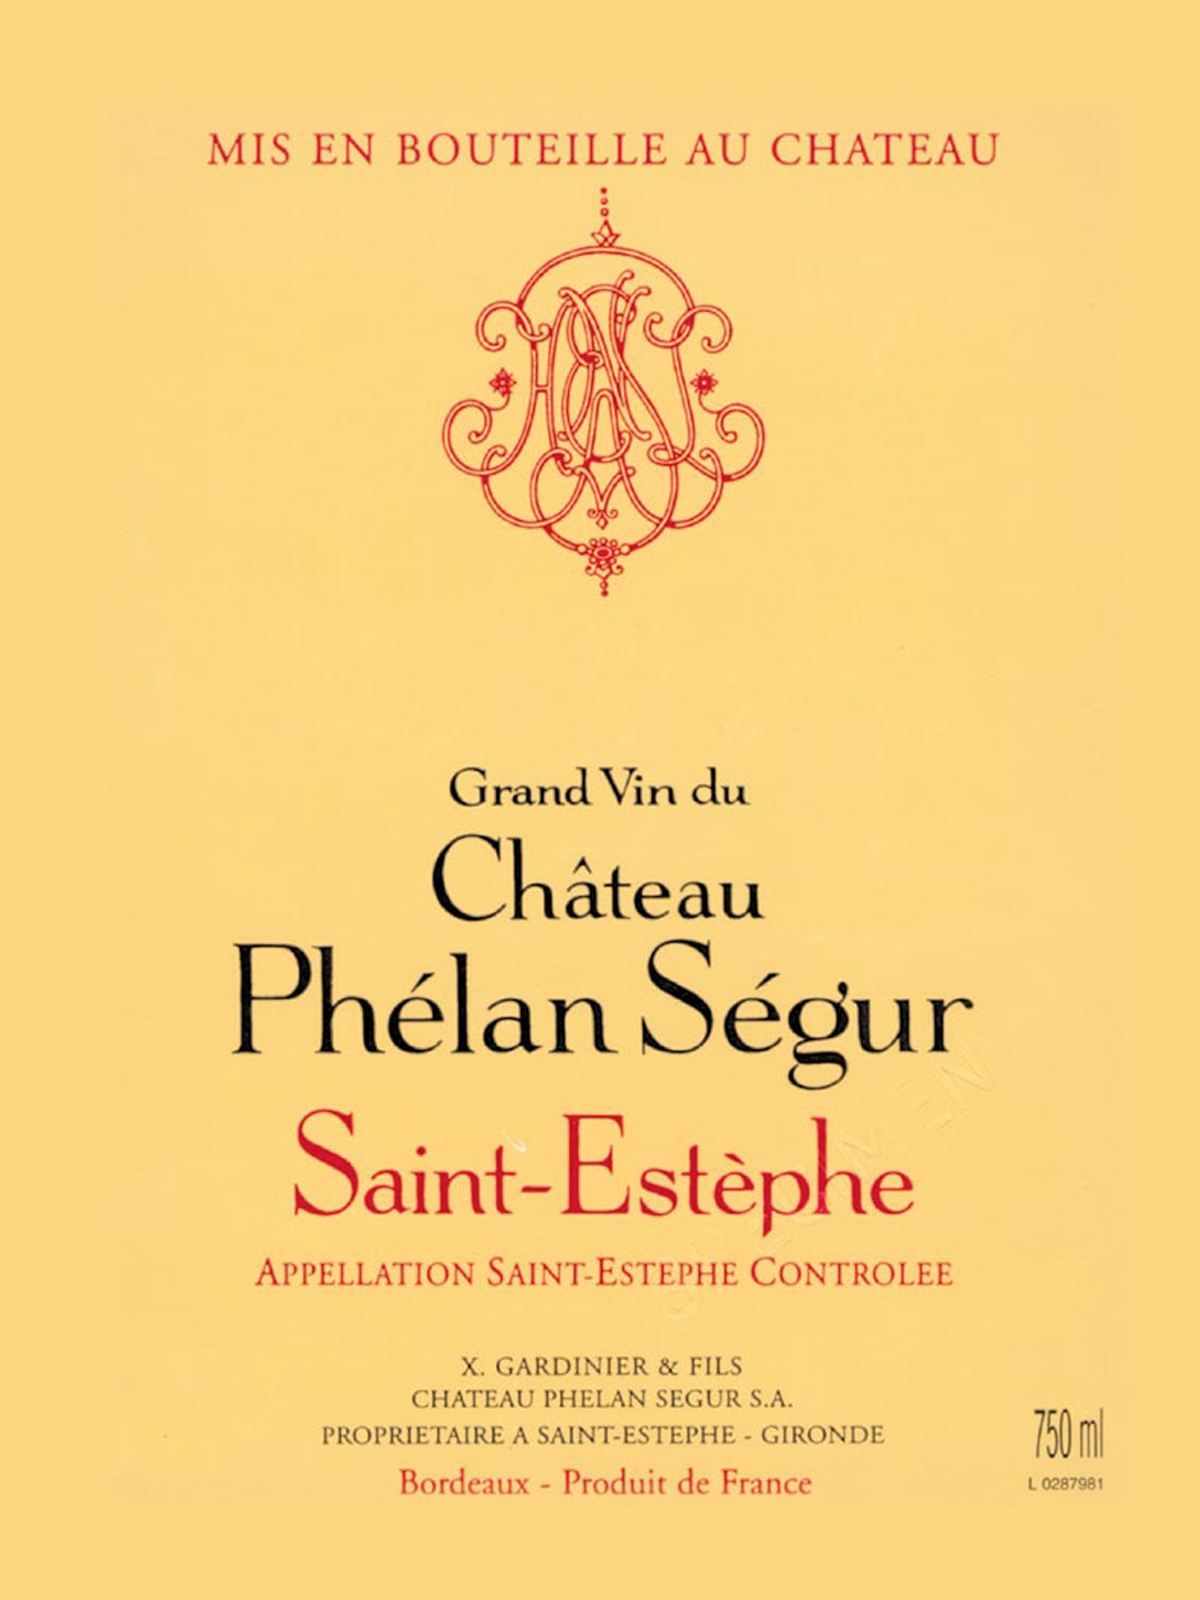 Phelan Segur, Bordeaux, Saint Estephe, France, AOC, Cru Bourgeois